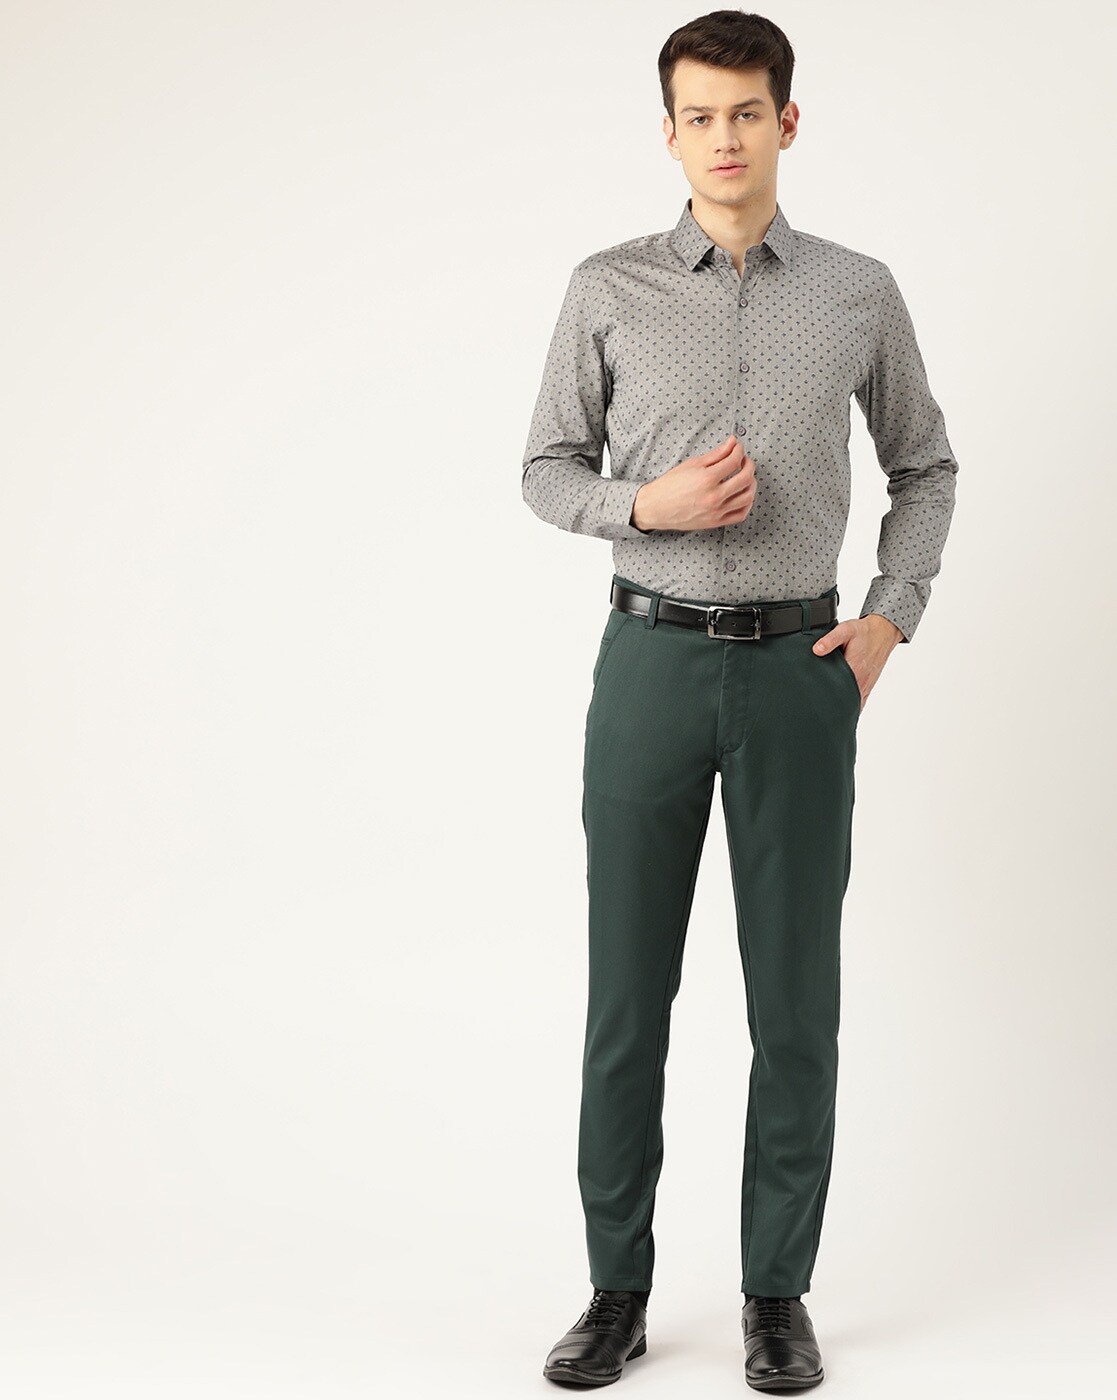 Grey Shirt Matching Pant Combinations Ideas for Men